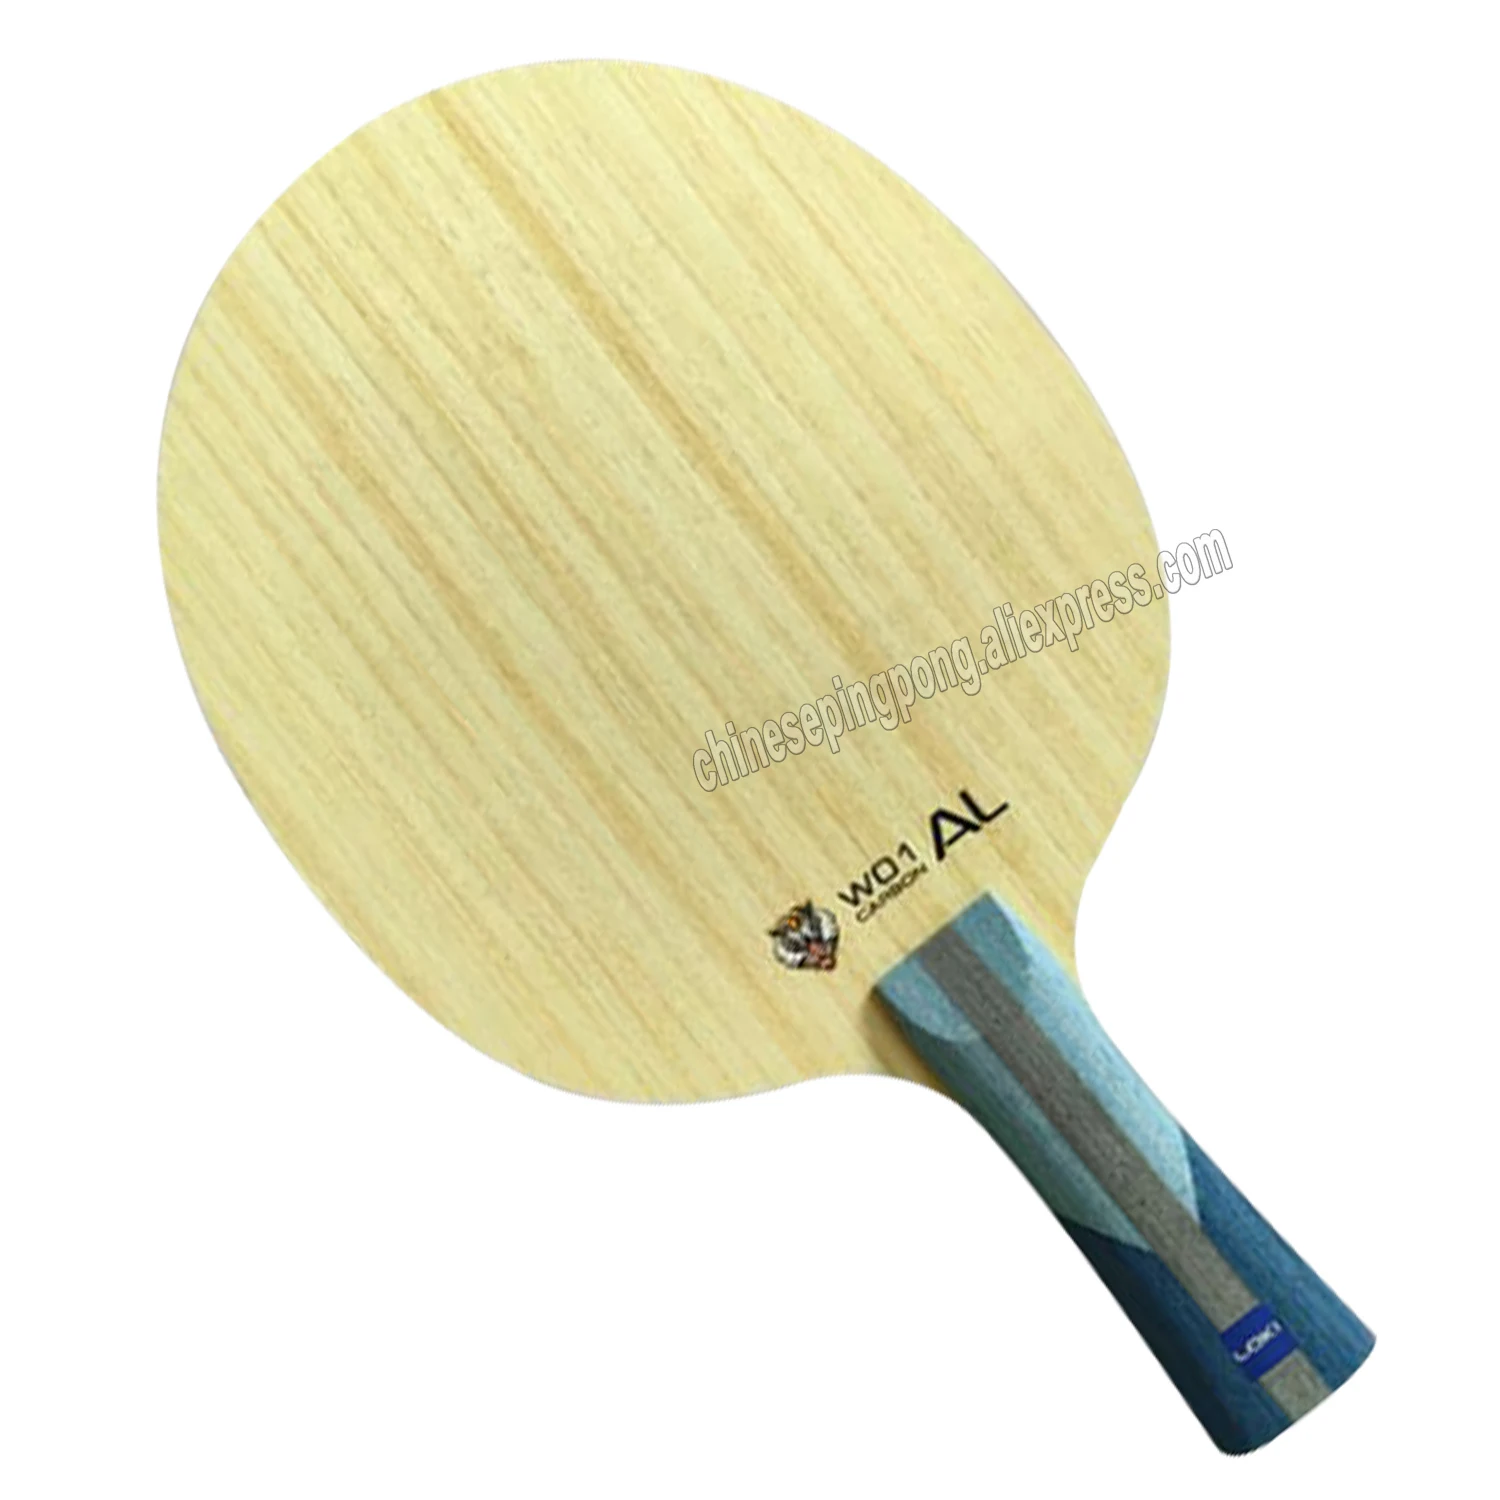 

LOKI W01 AL Super WANG HAO Blue Carbon Table Tennis Blade (5 Ply Wood+2 Carbon) LOKI Racket Ping Pong Bat Paddle